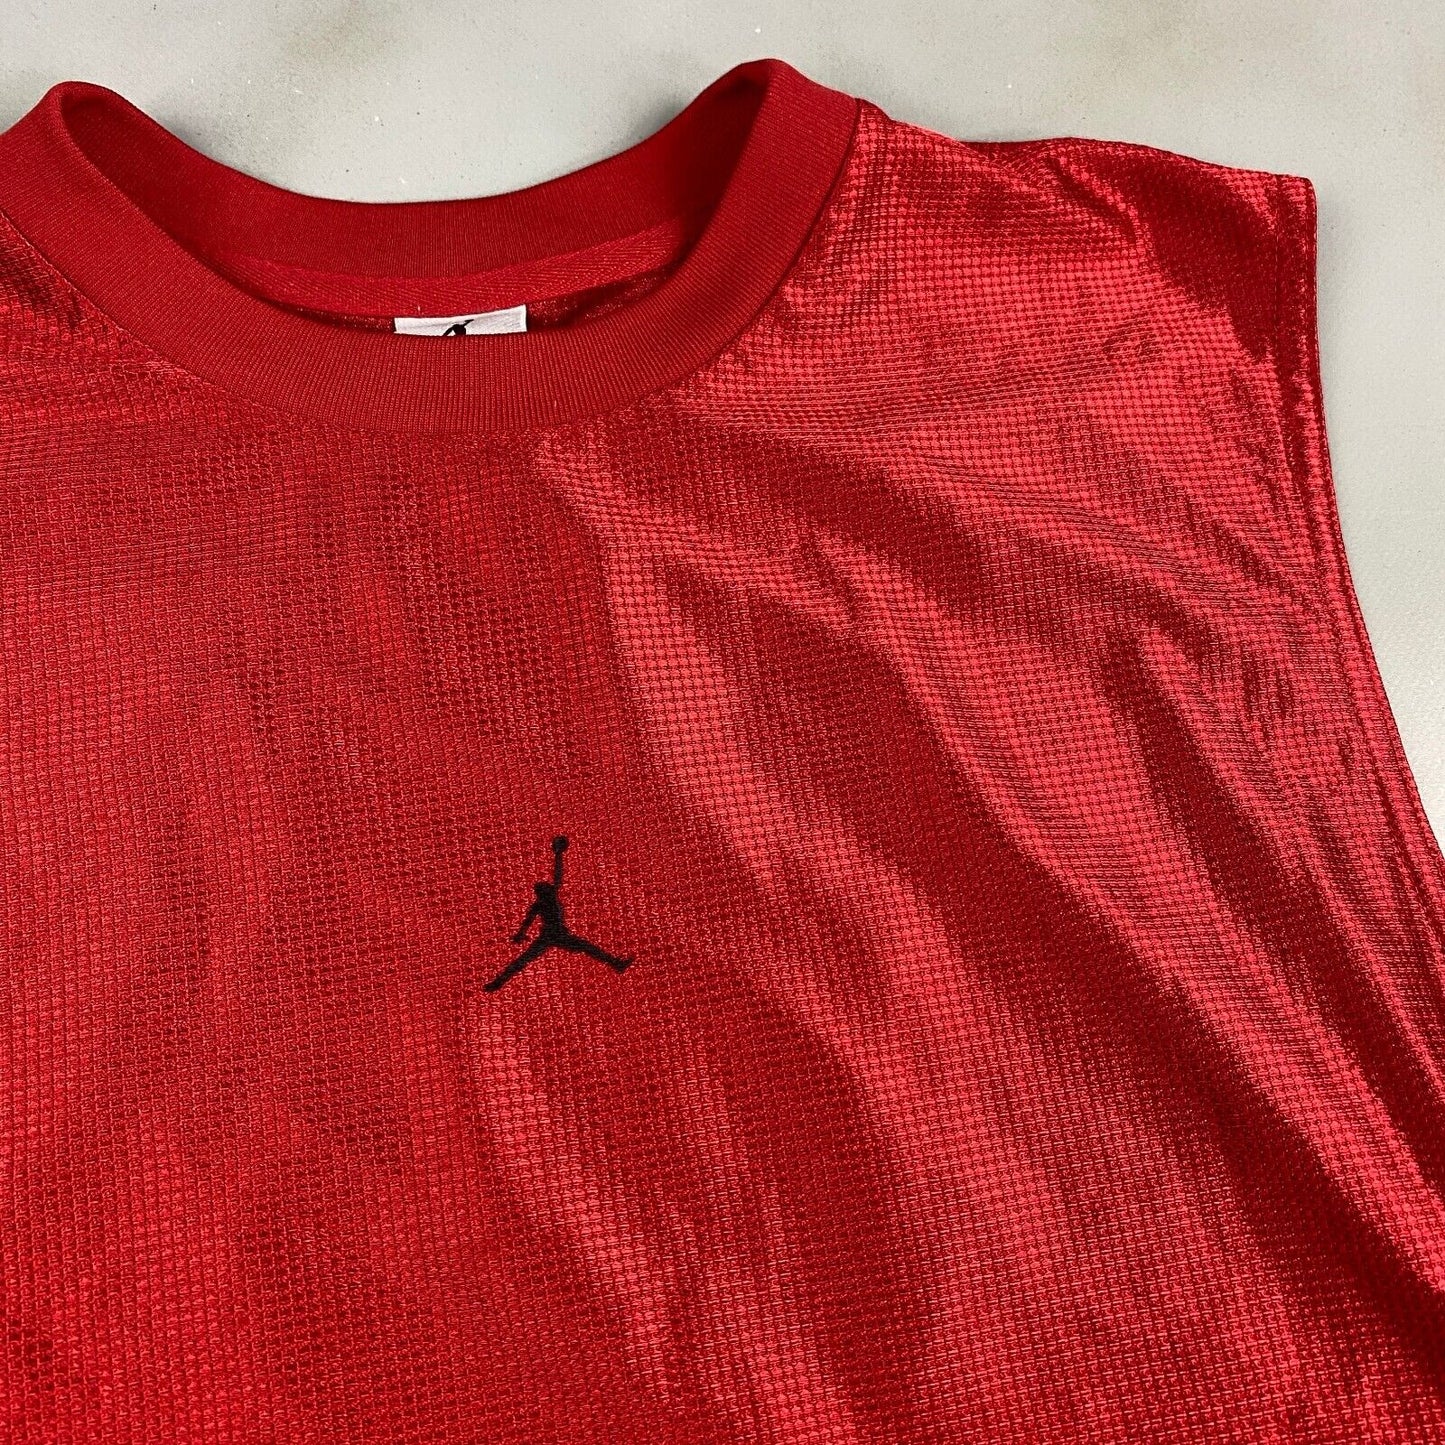 VINTAGE Jordan Embroidered Jersey Sleeveless Tank T-Shirt sz Large Men Adult